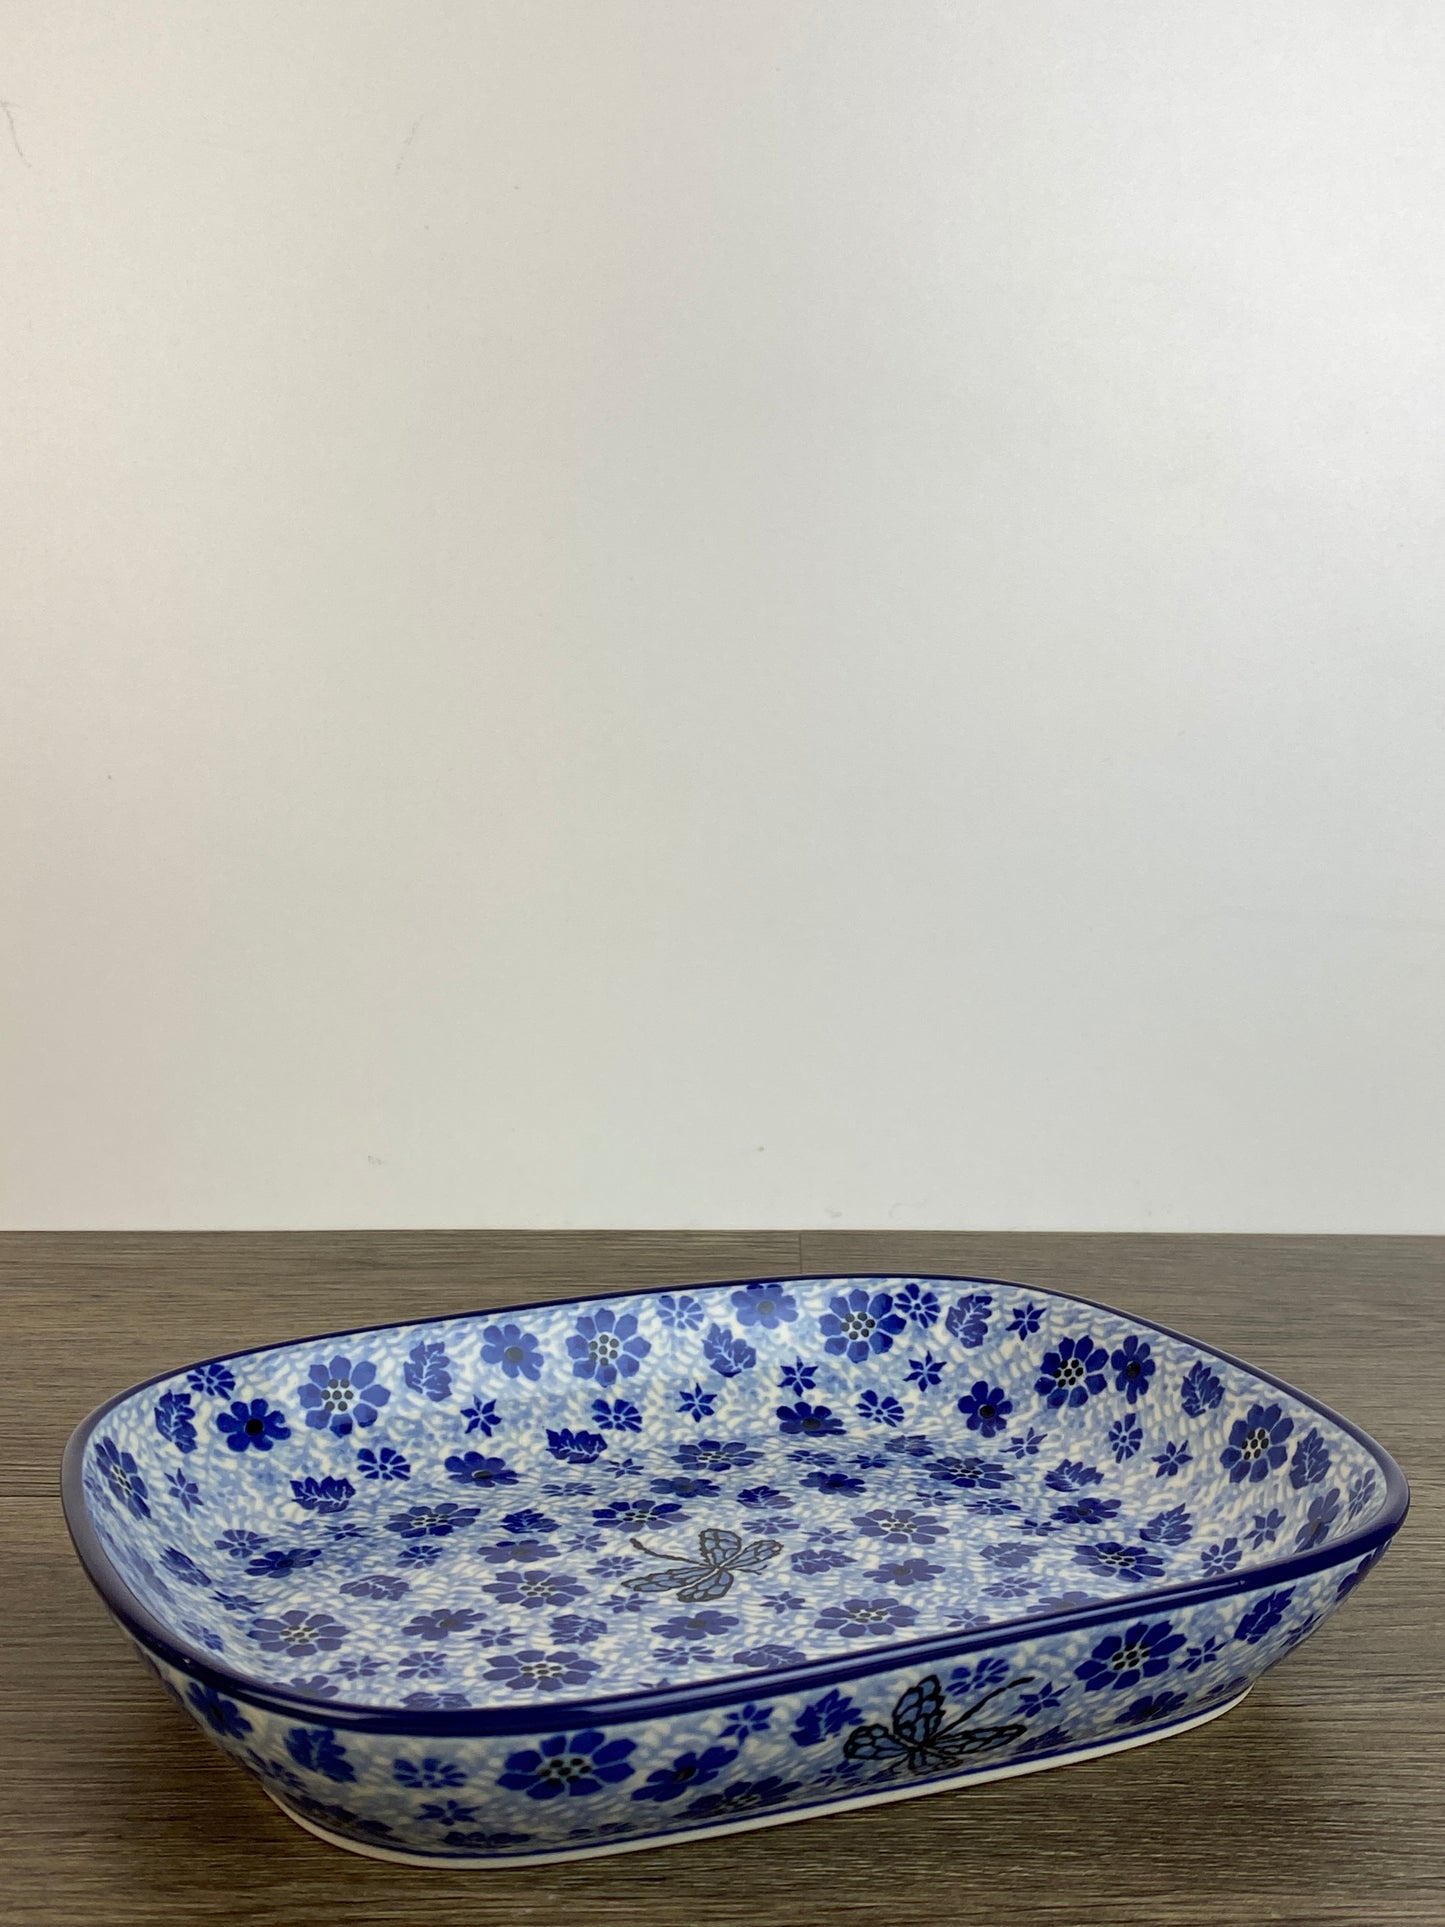 Rectangular Dish - Shape 159 - Pattern 1443